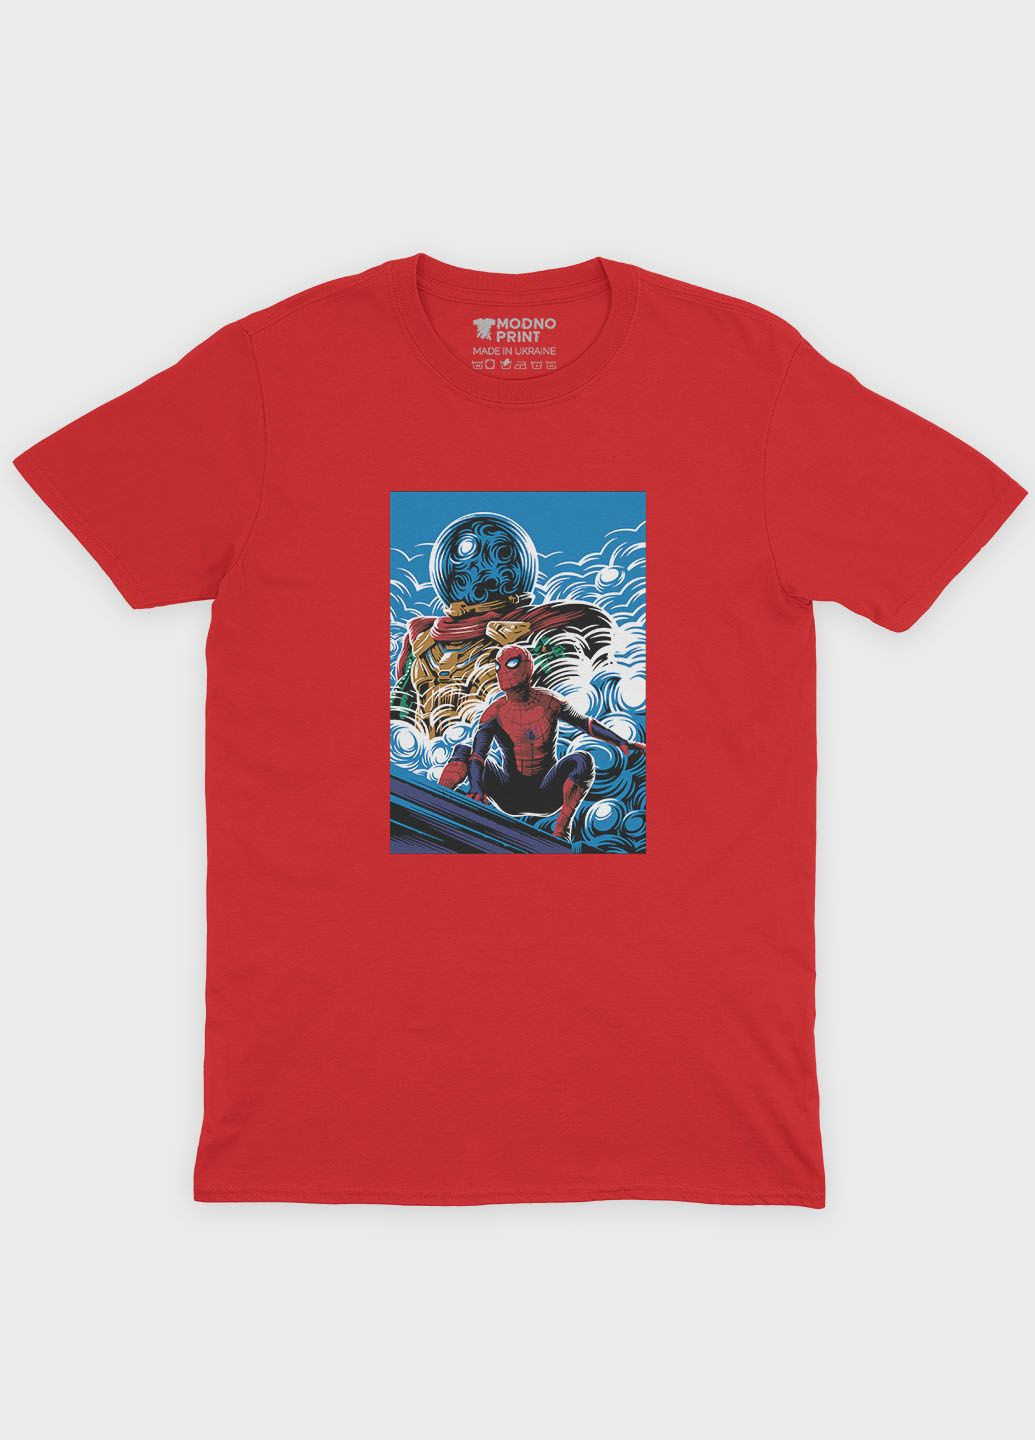 Червона демісезонна футболка для хлопчика з принтом супергероя - людина-павук (ts001-1-sre-006-014-062-b) Modno